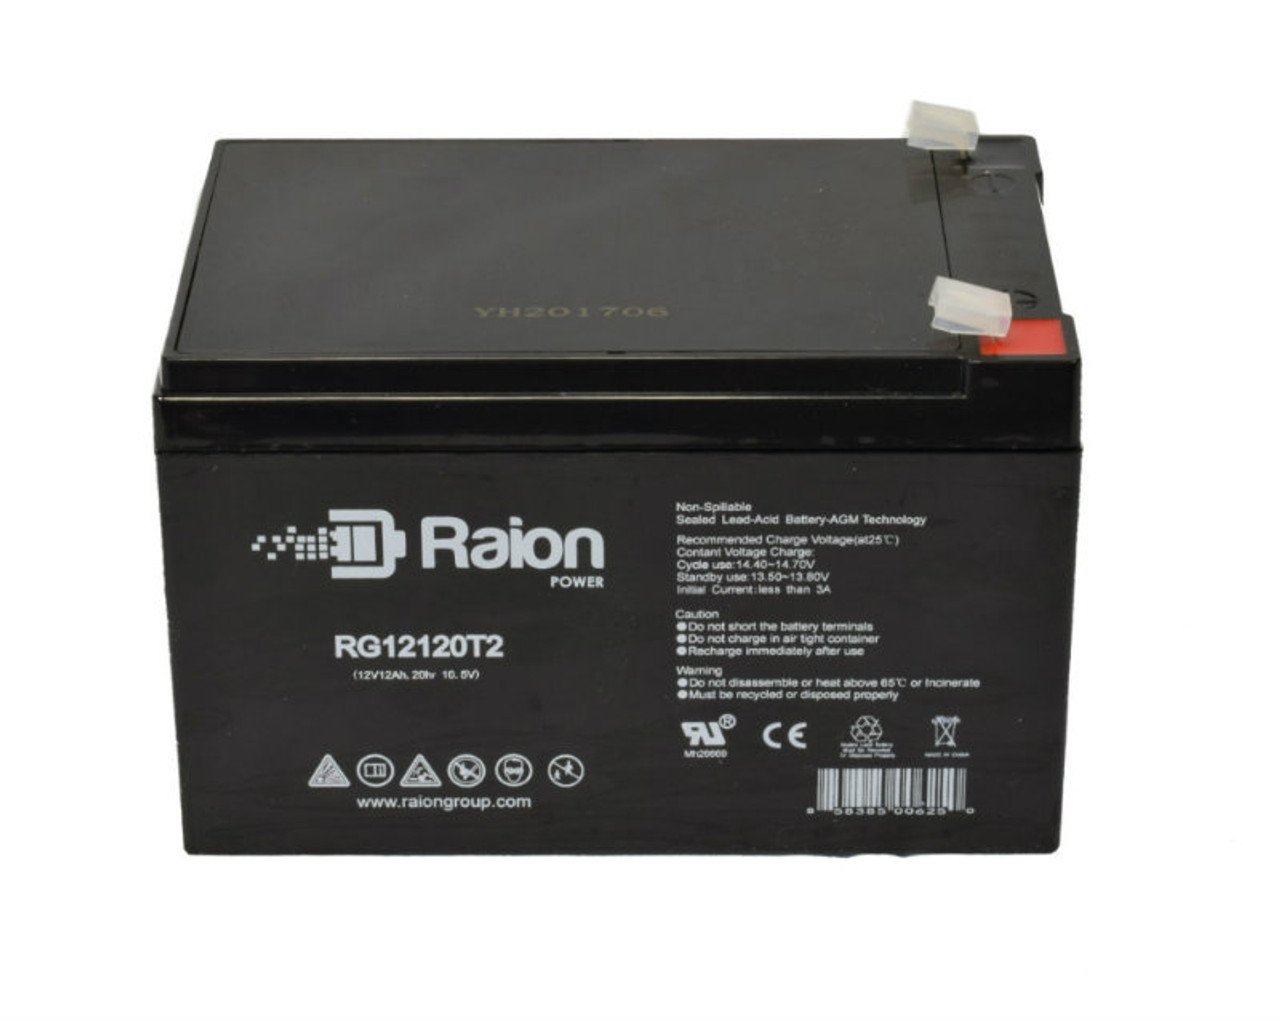 Raion Power RG12120T2 SLA Battery for Sonnenschein LCR12V10PF